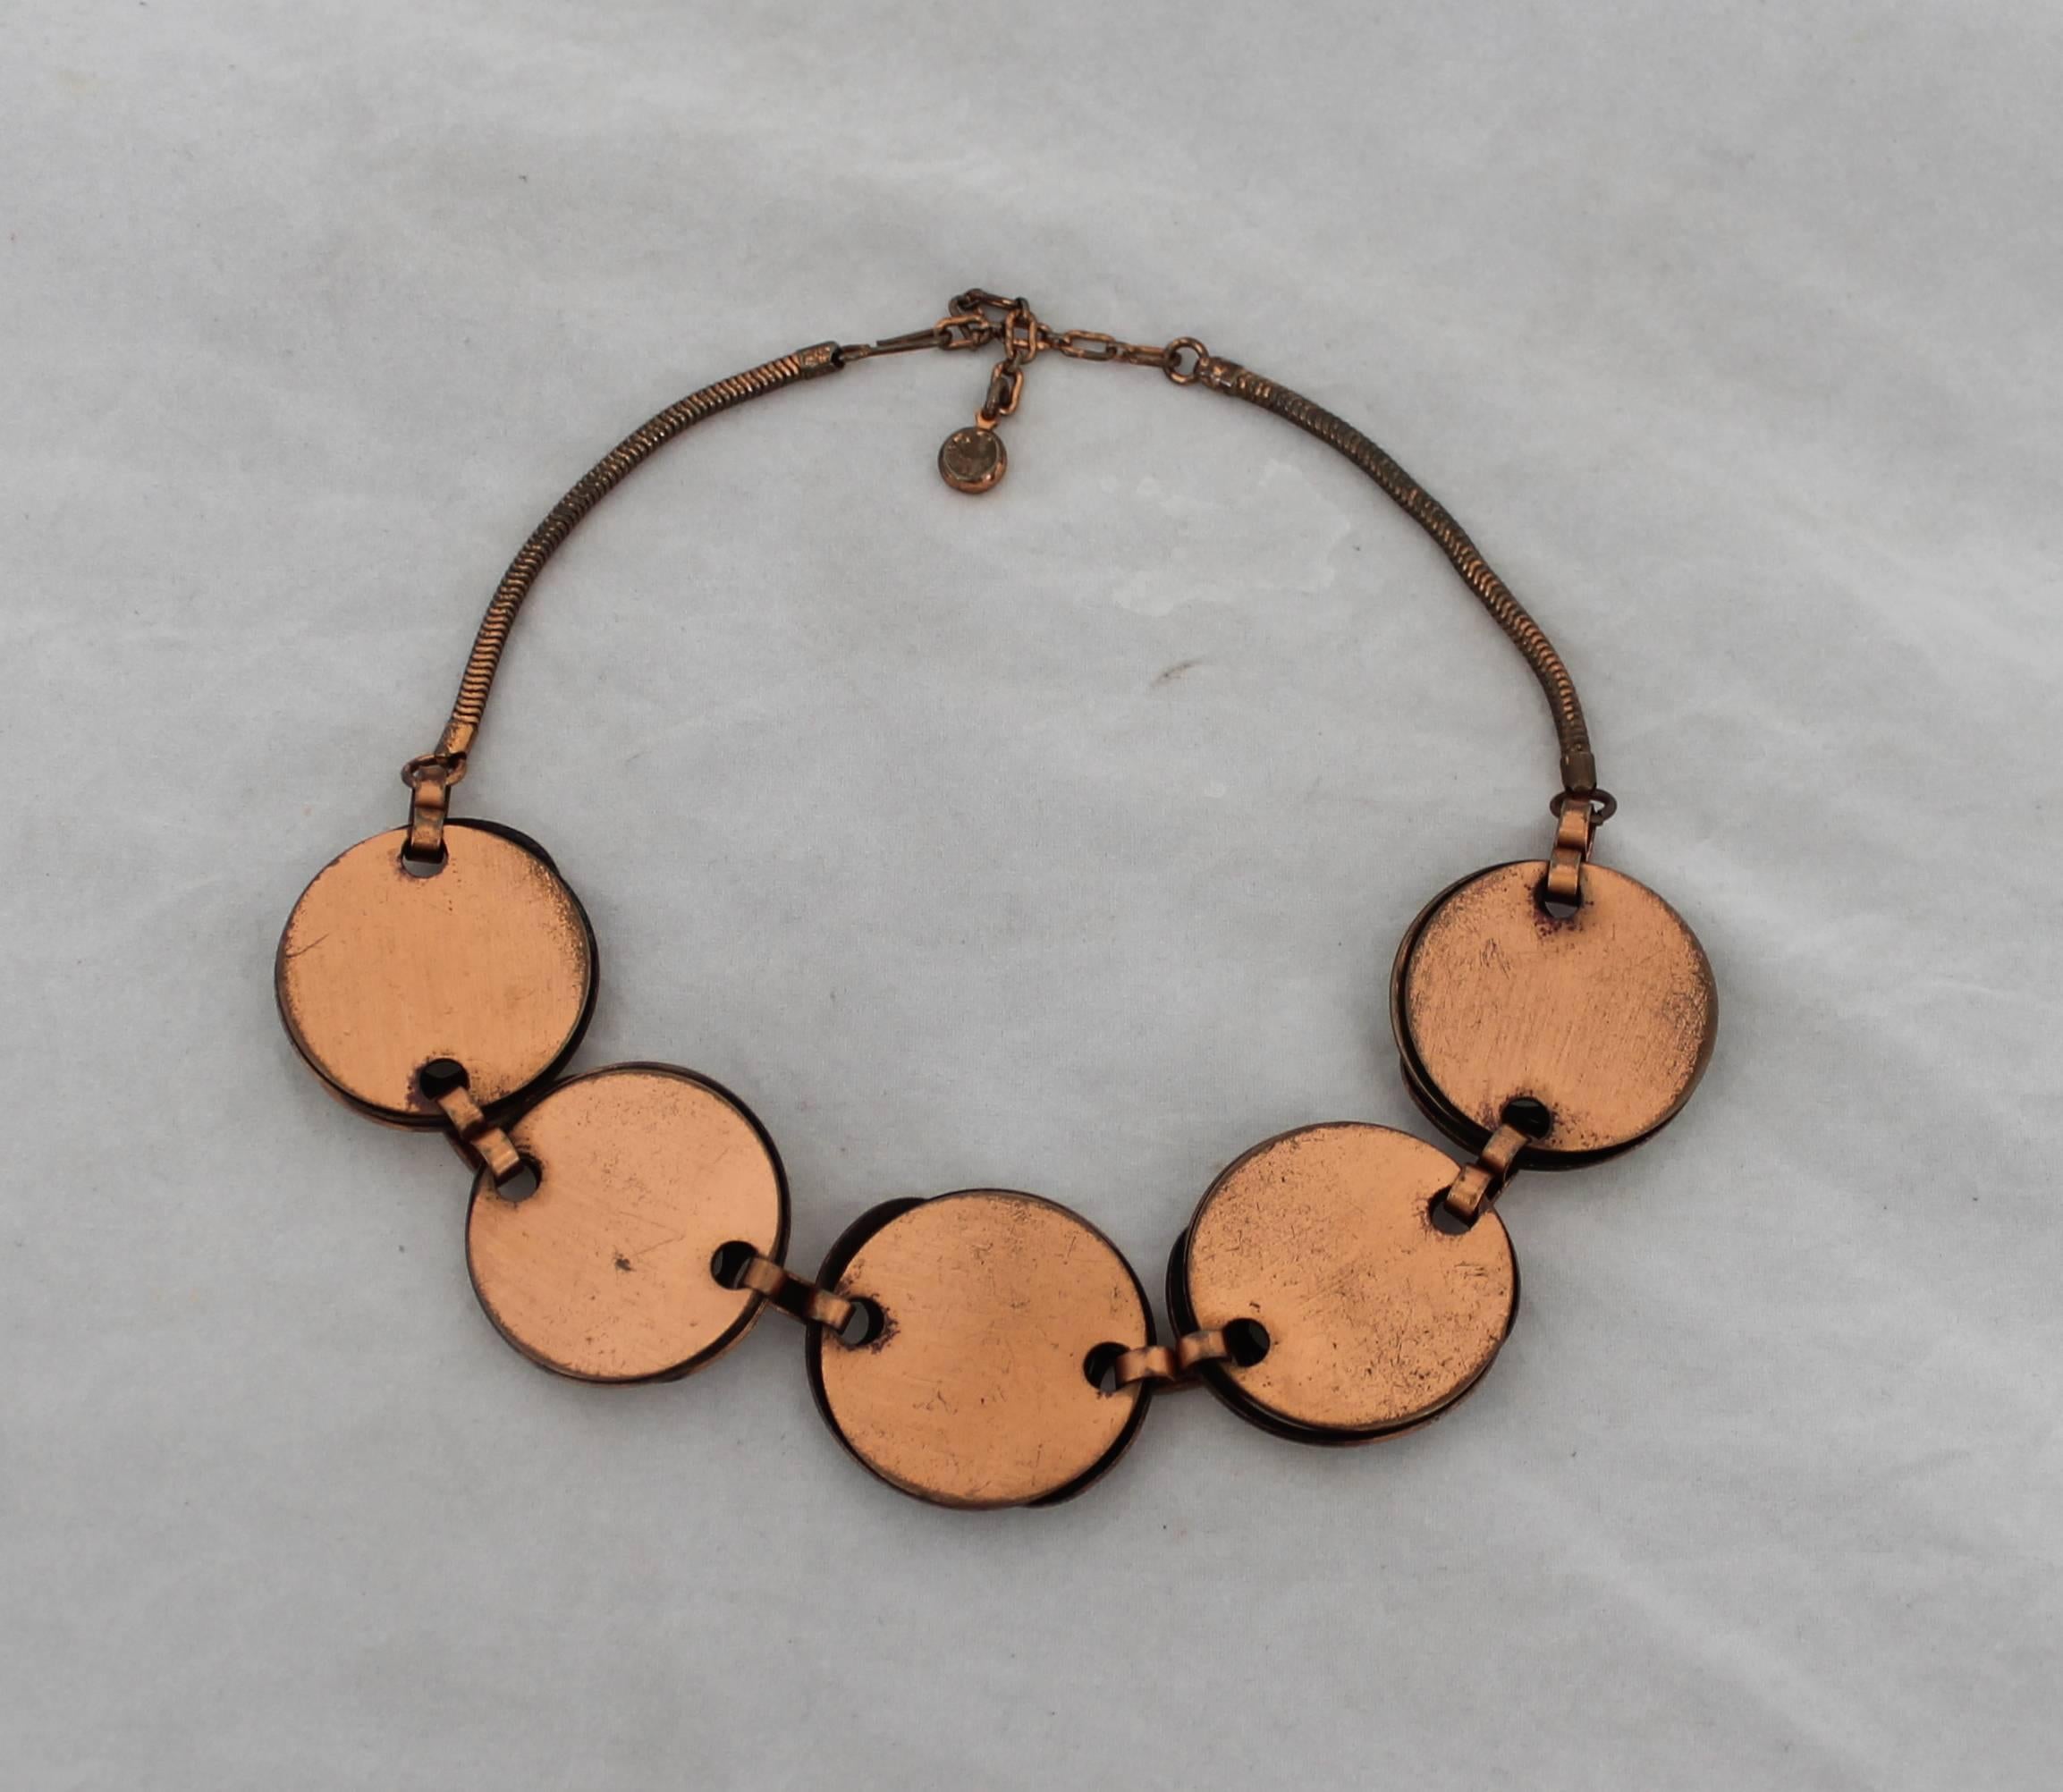 rebajes copper jewelry